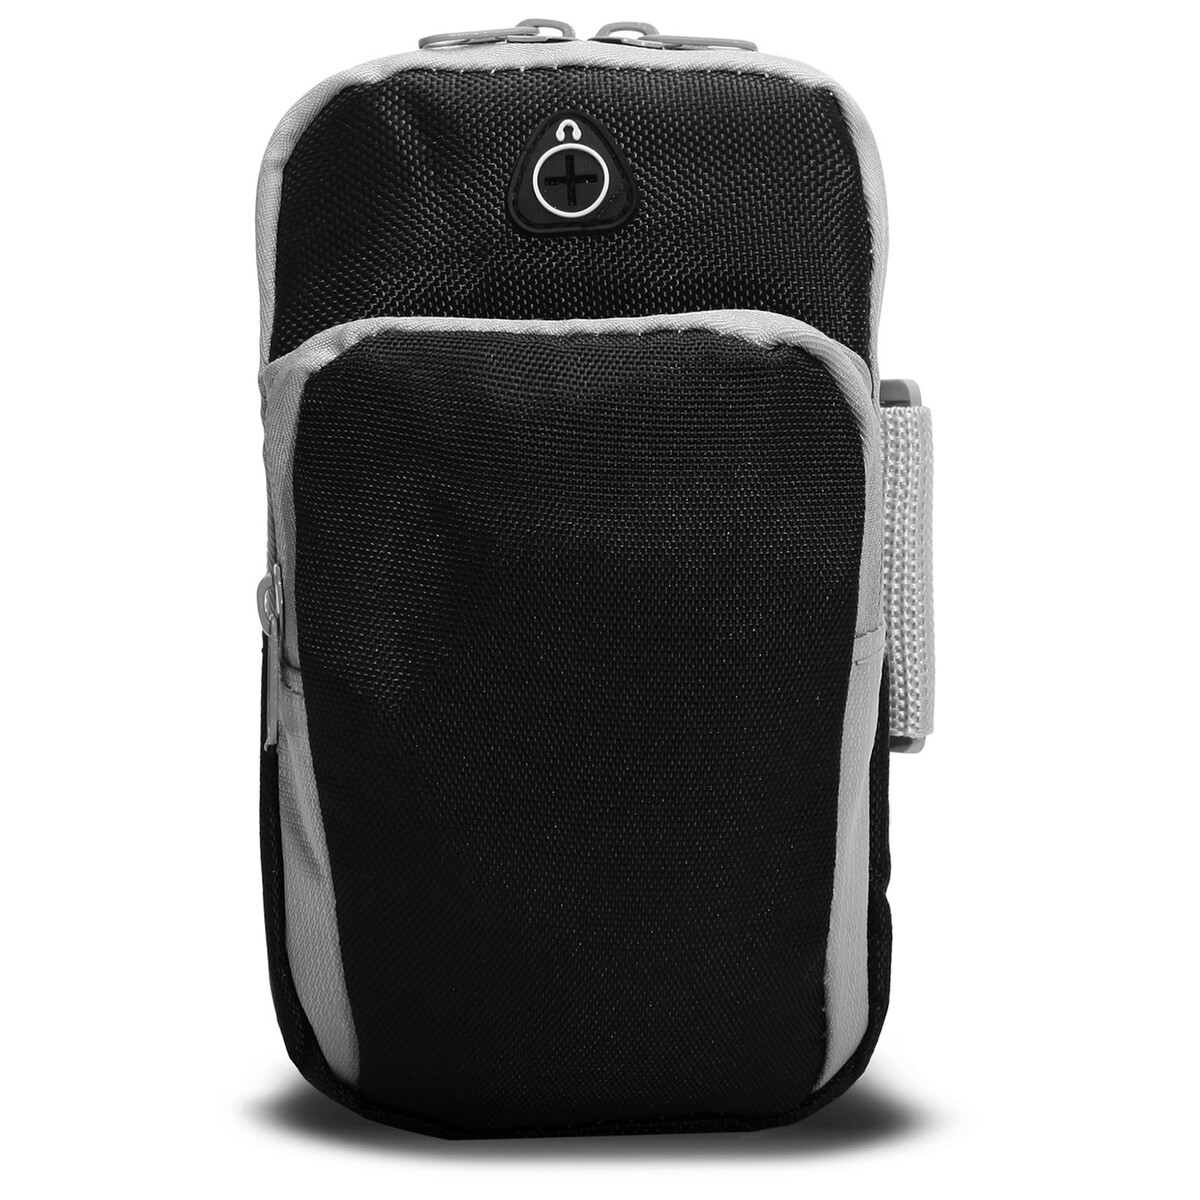 Сумка спортивная на руку onlytop, 18х12 см, цвет черный сумка спортивная на руку onlytop 18х12 см